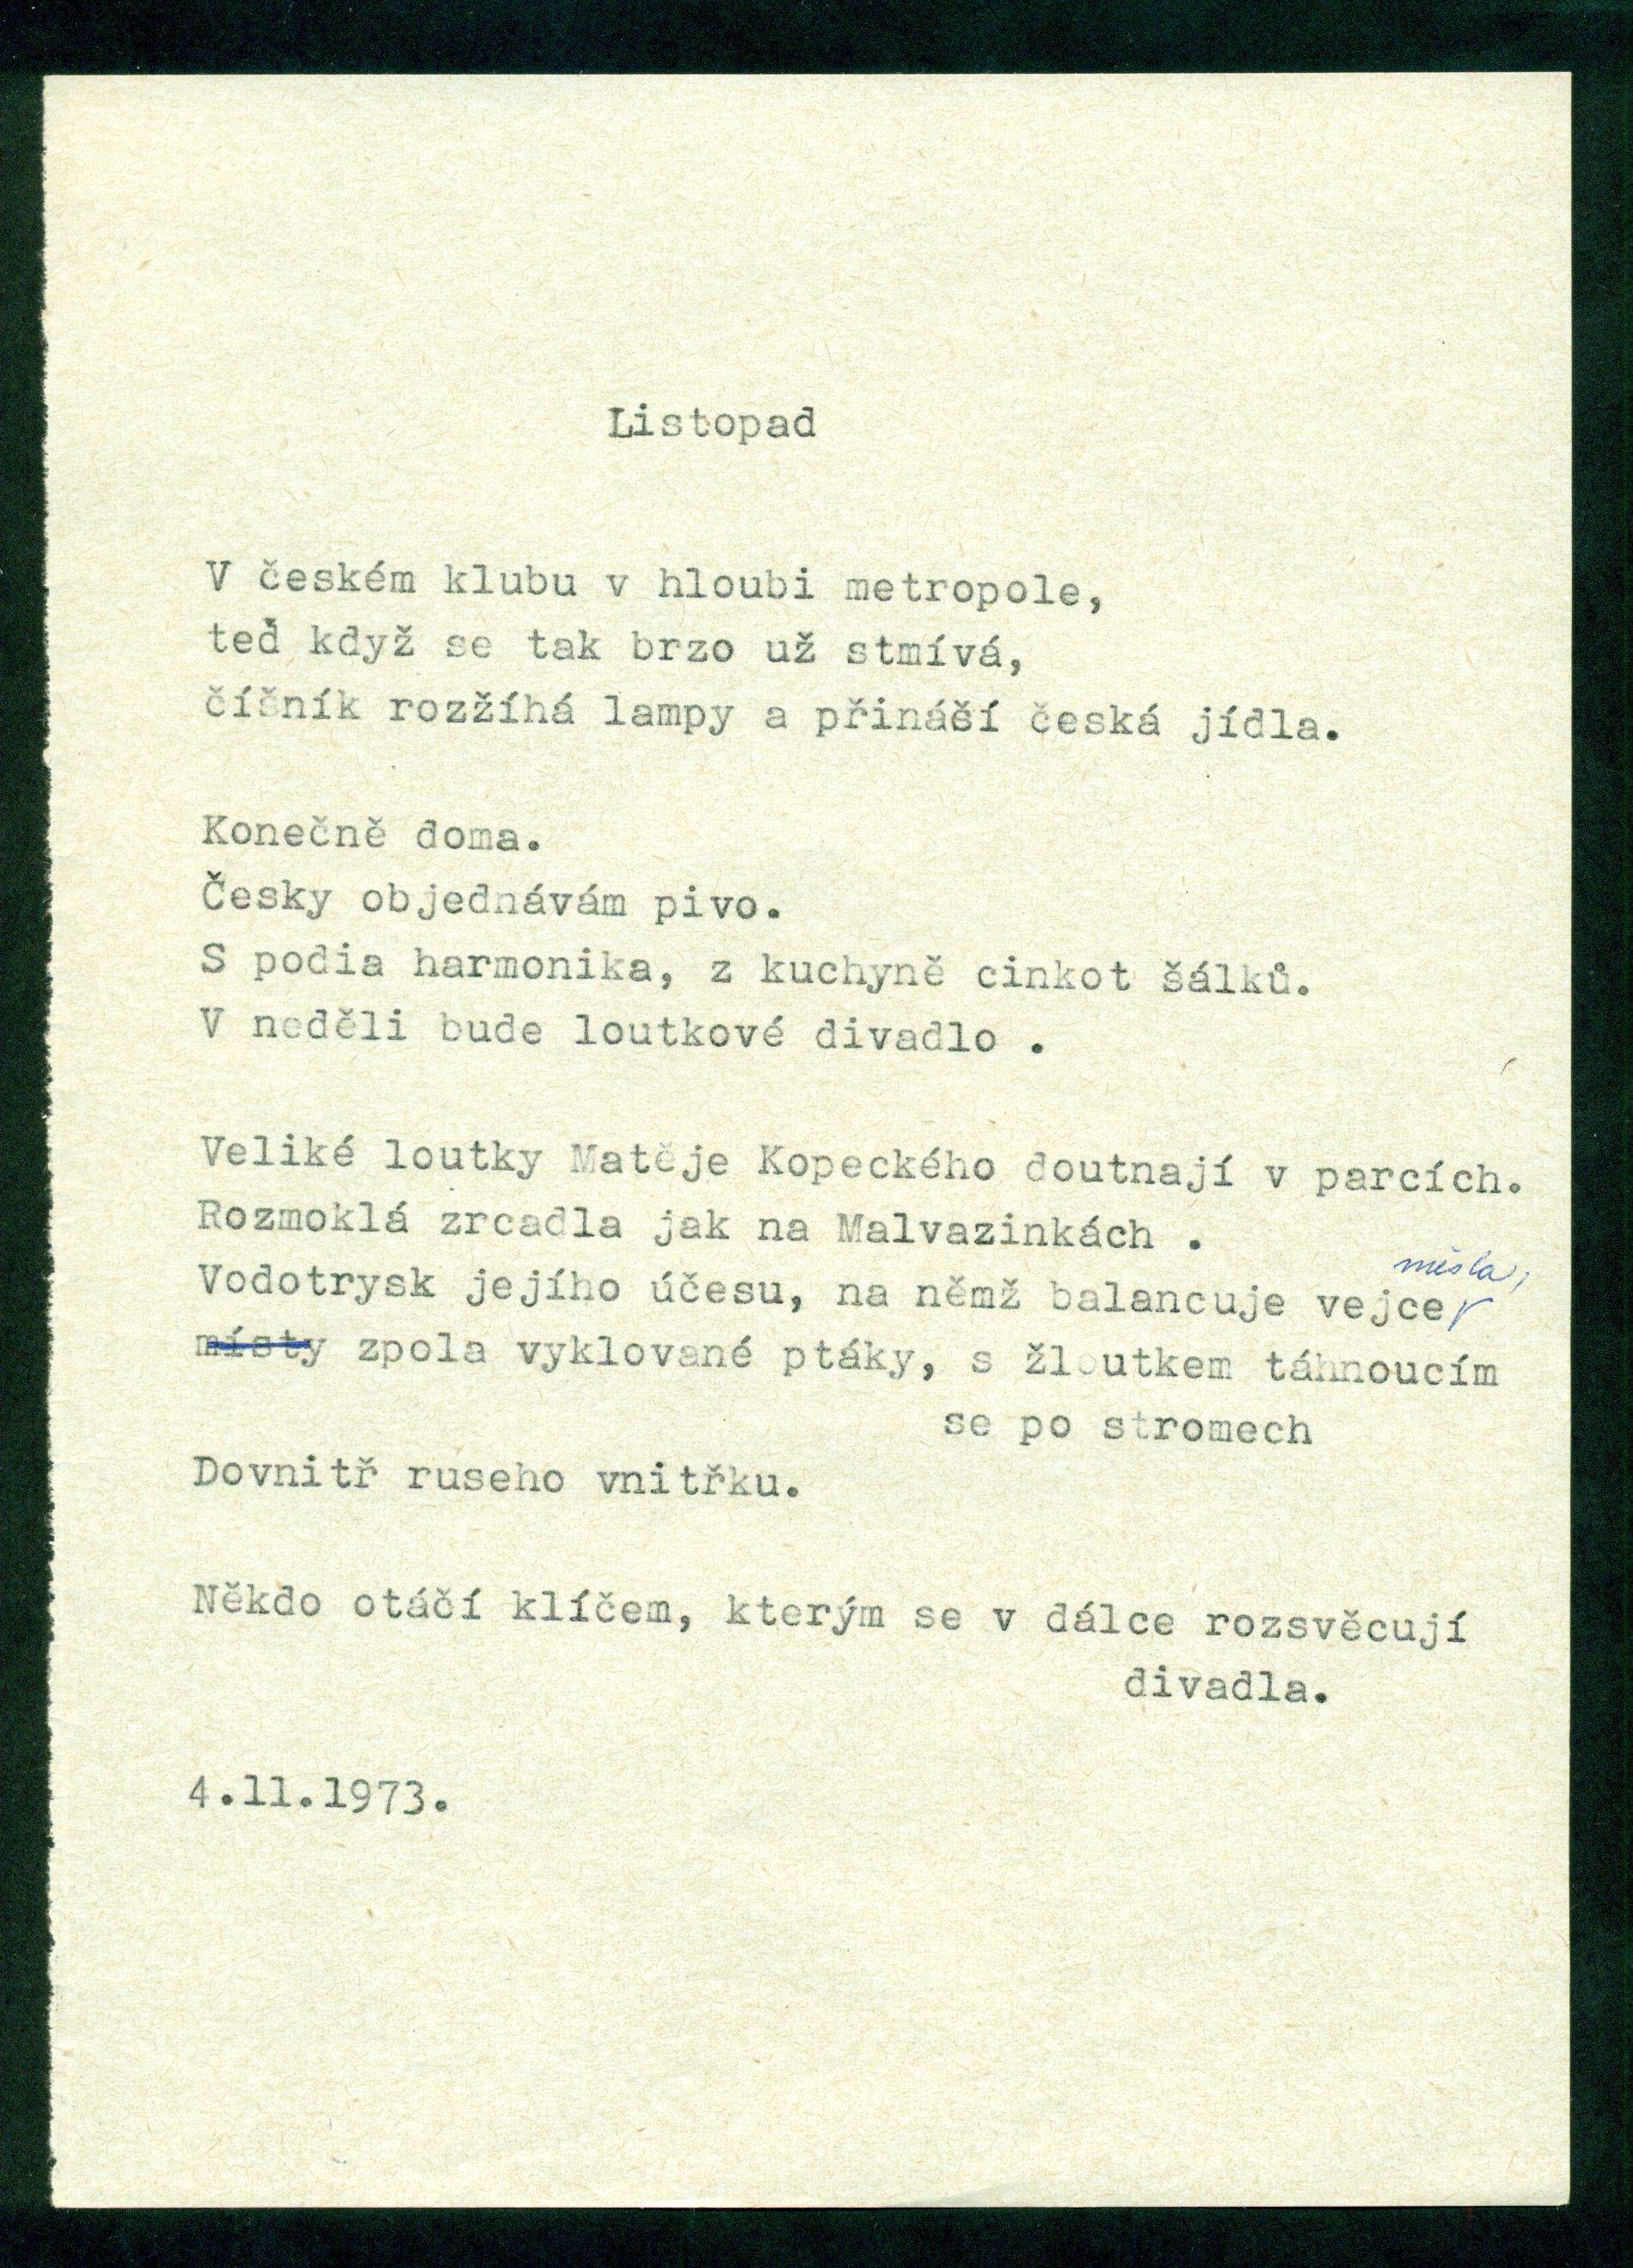 Blatný, Ivan. Old Addresses, 1979